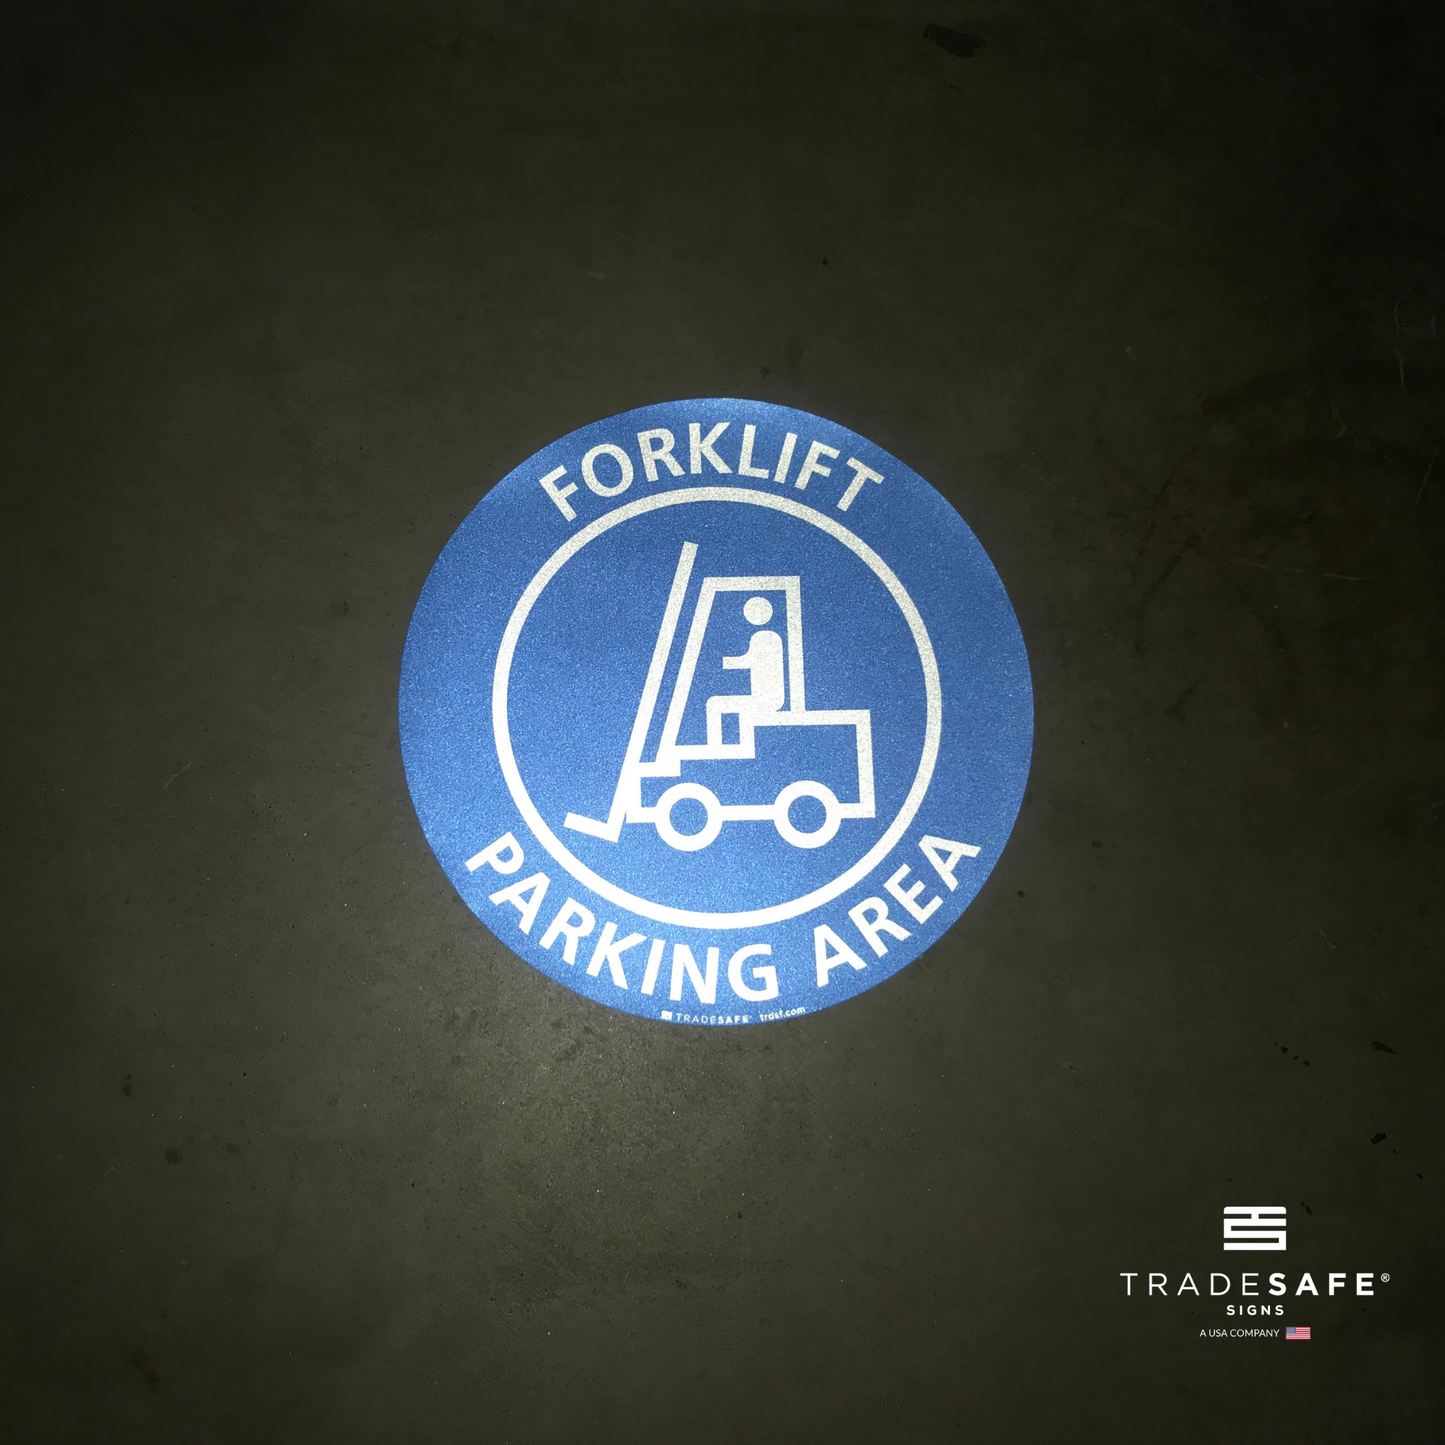 reflective attribute of forklift parking area sign on black background